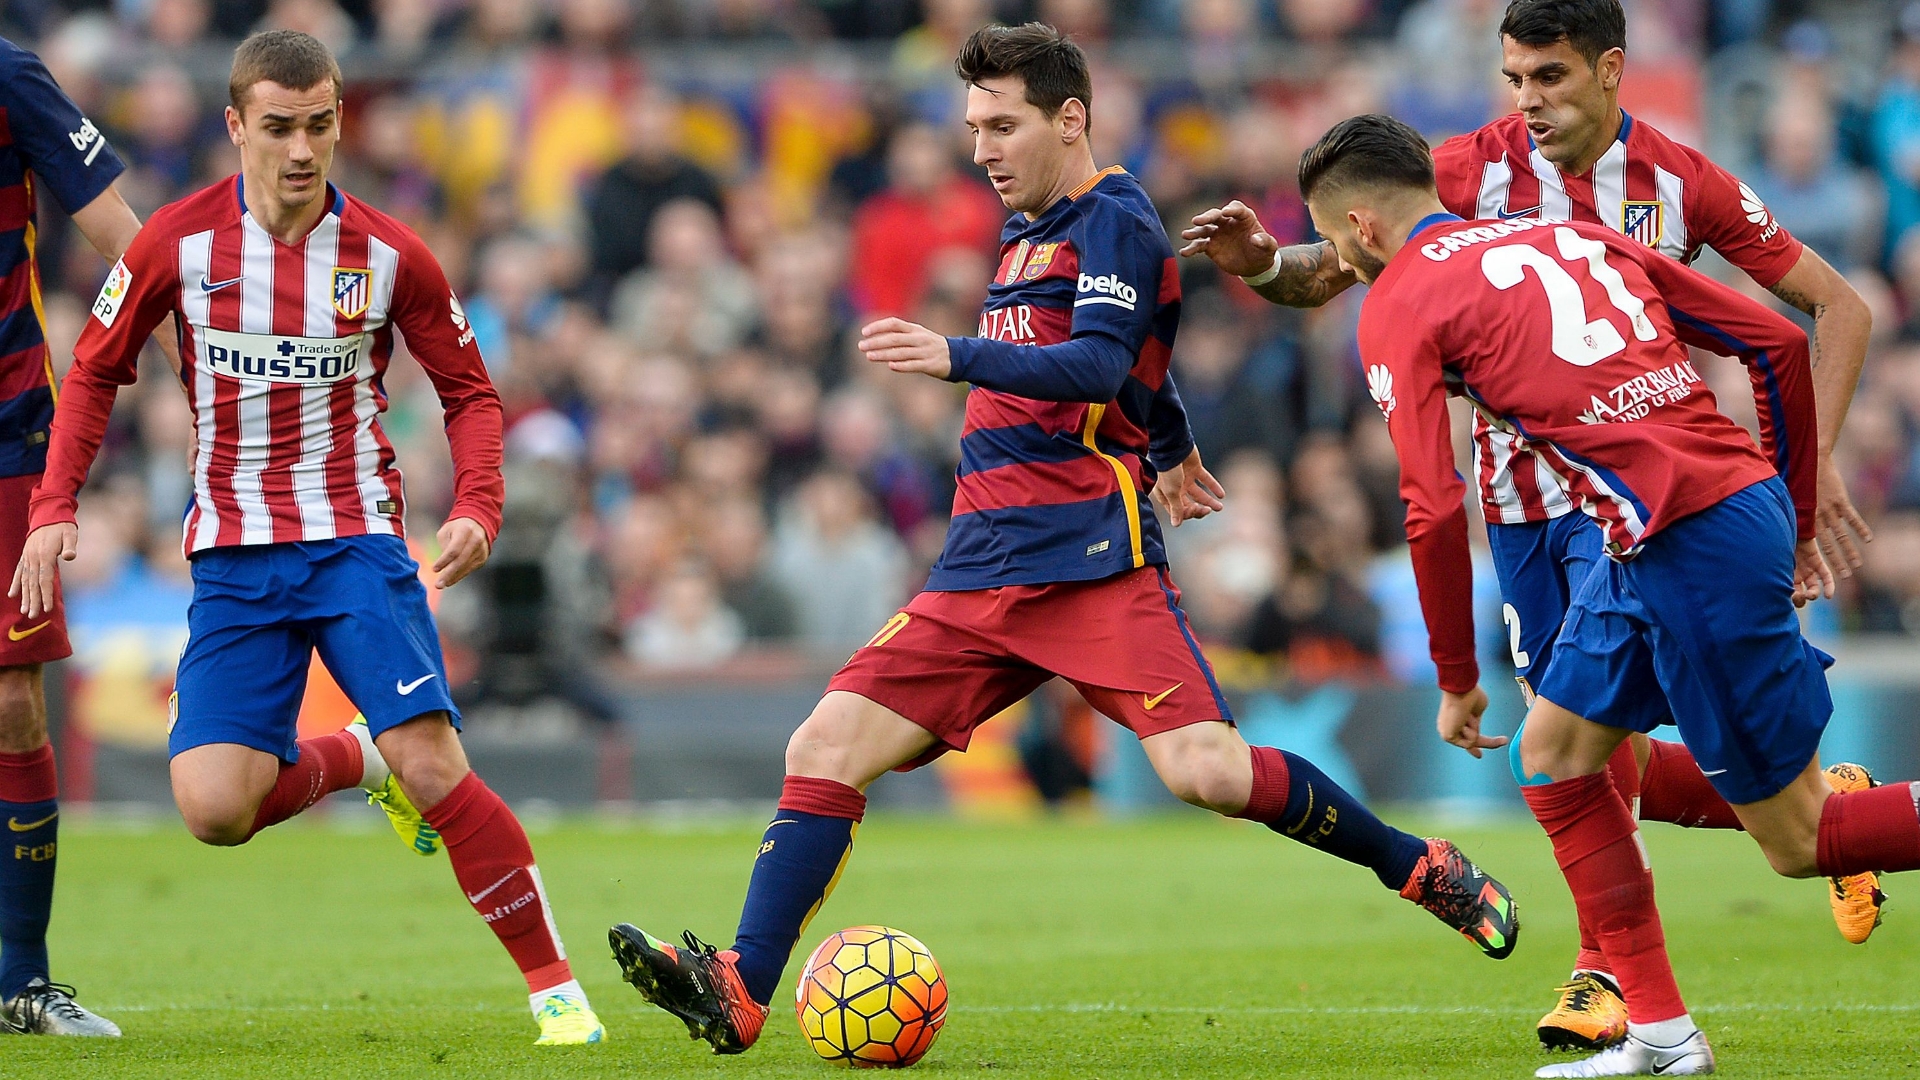 Can Lionel Messi exact revenge against Atletico after last seasons Champions League defeat?